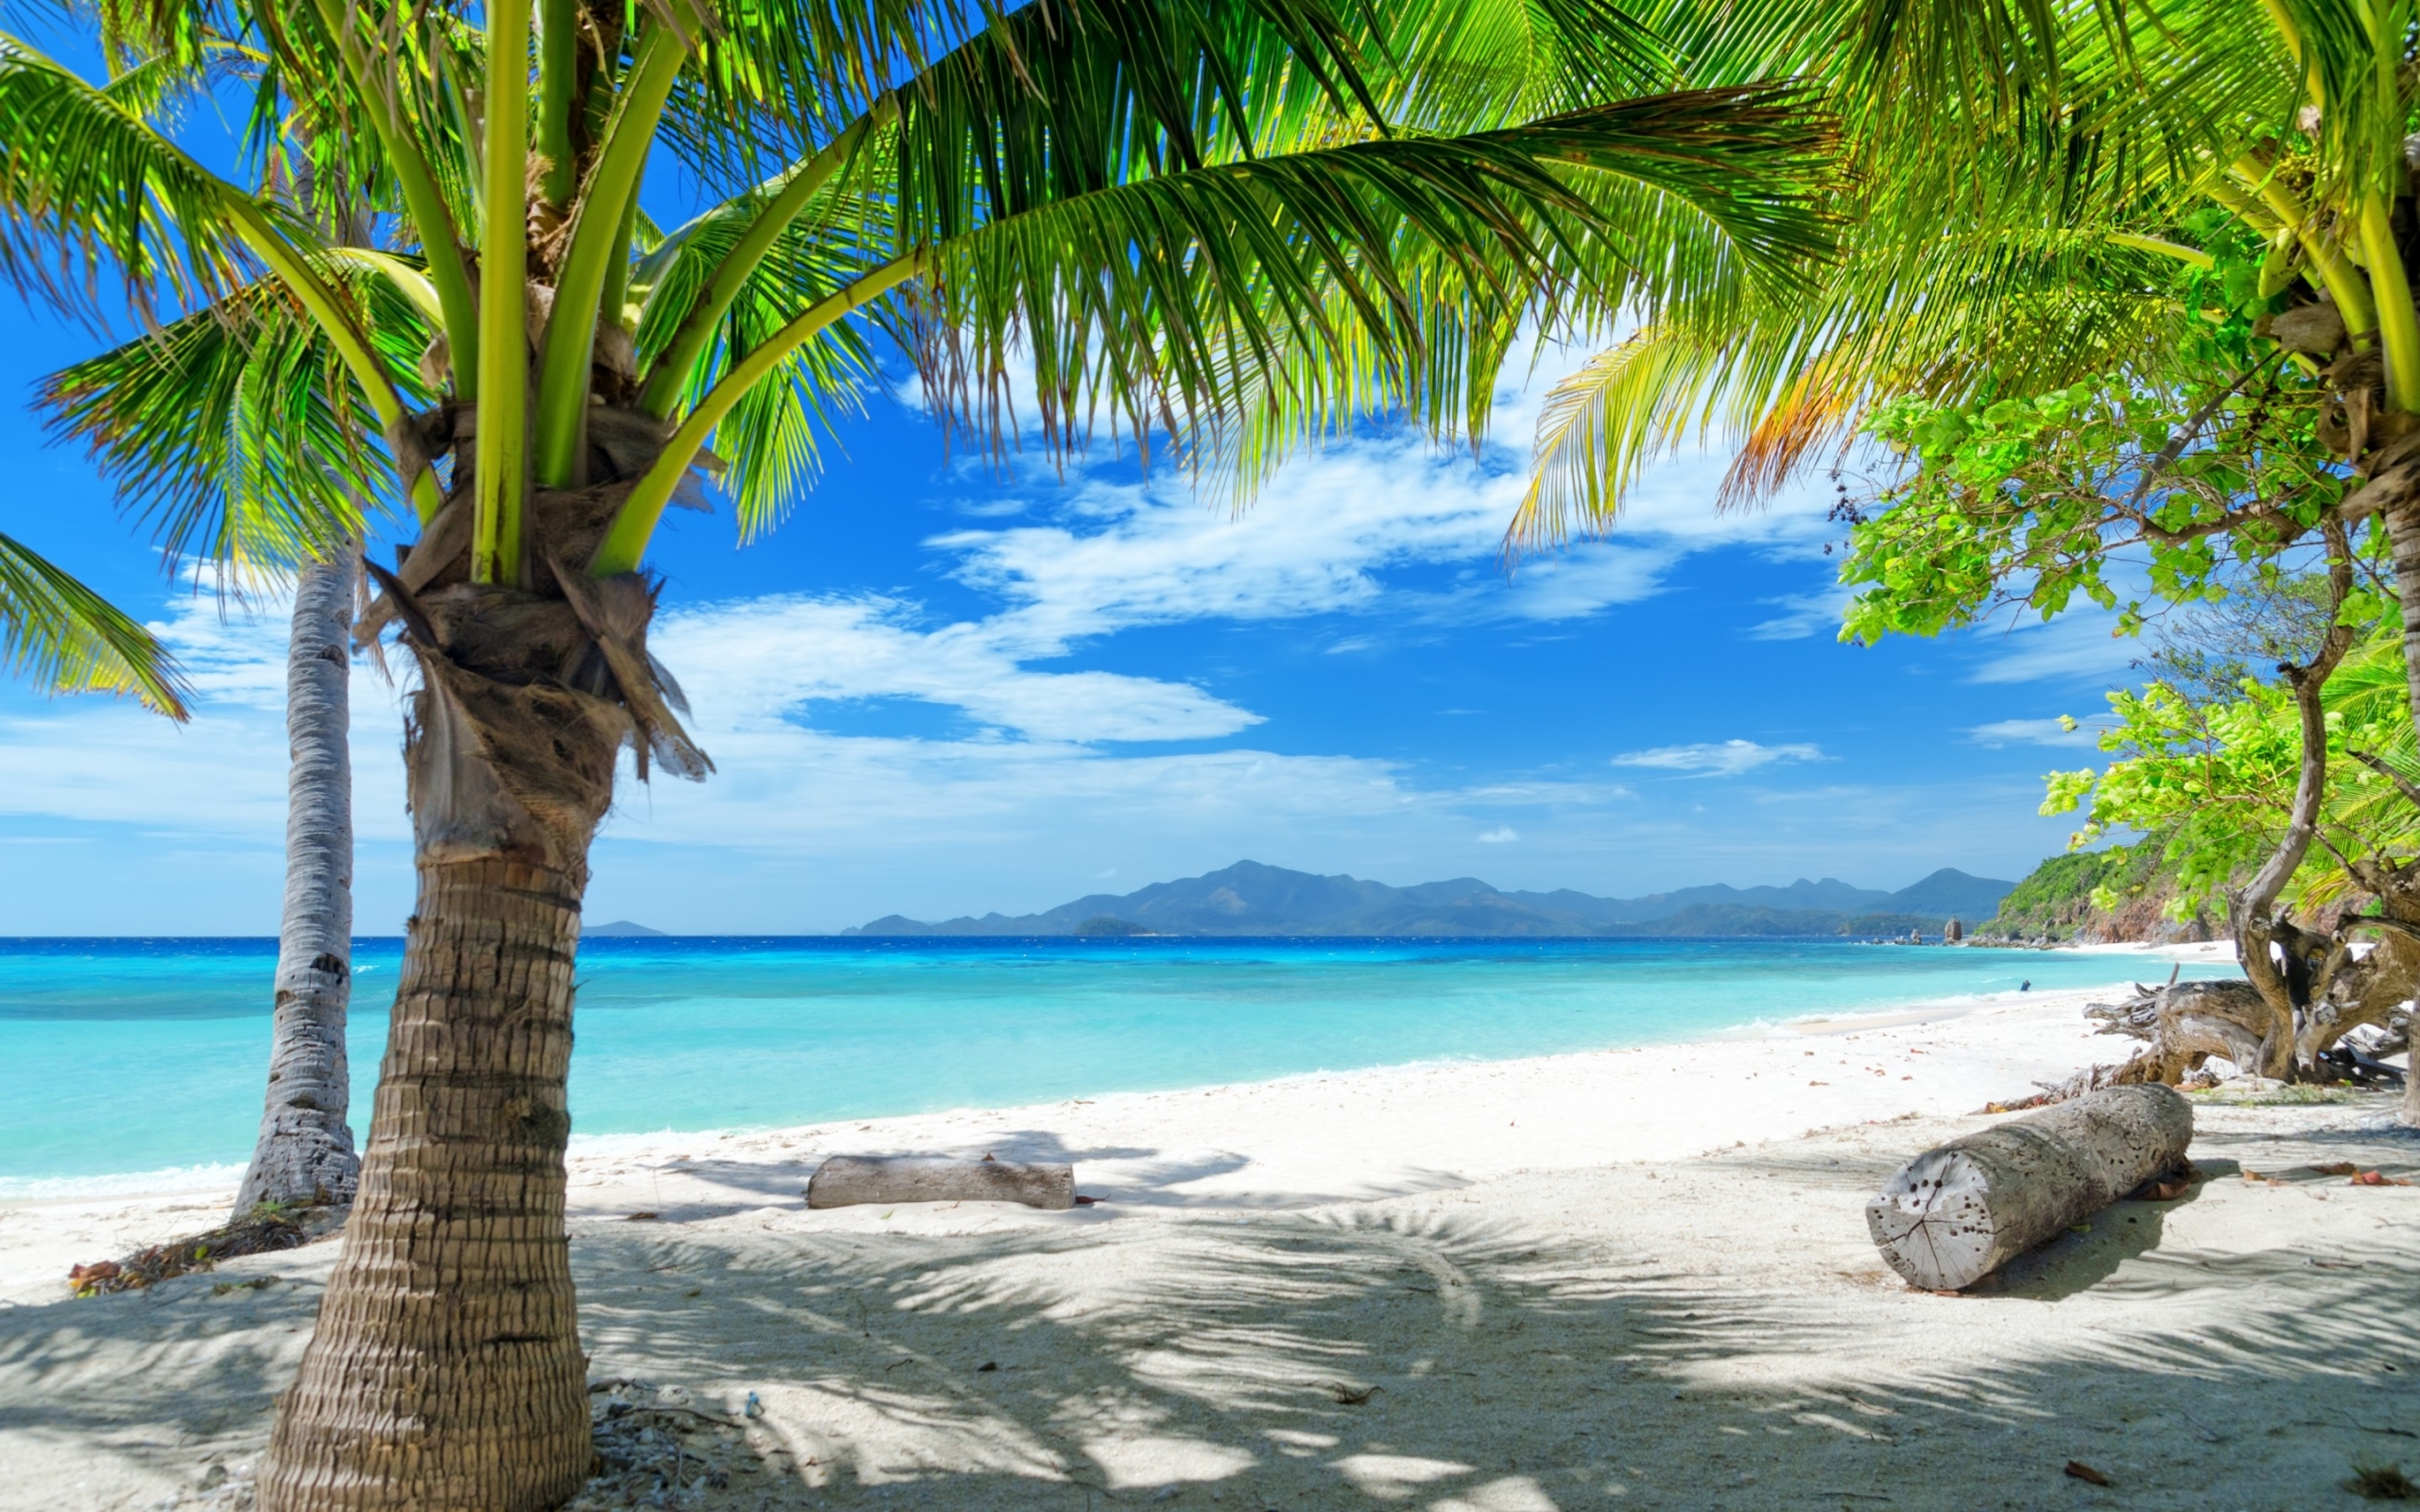  beach with palm trees HD Desktop Wallpaper HD Desktop Wallpaper 2560x1600